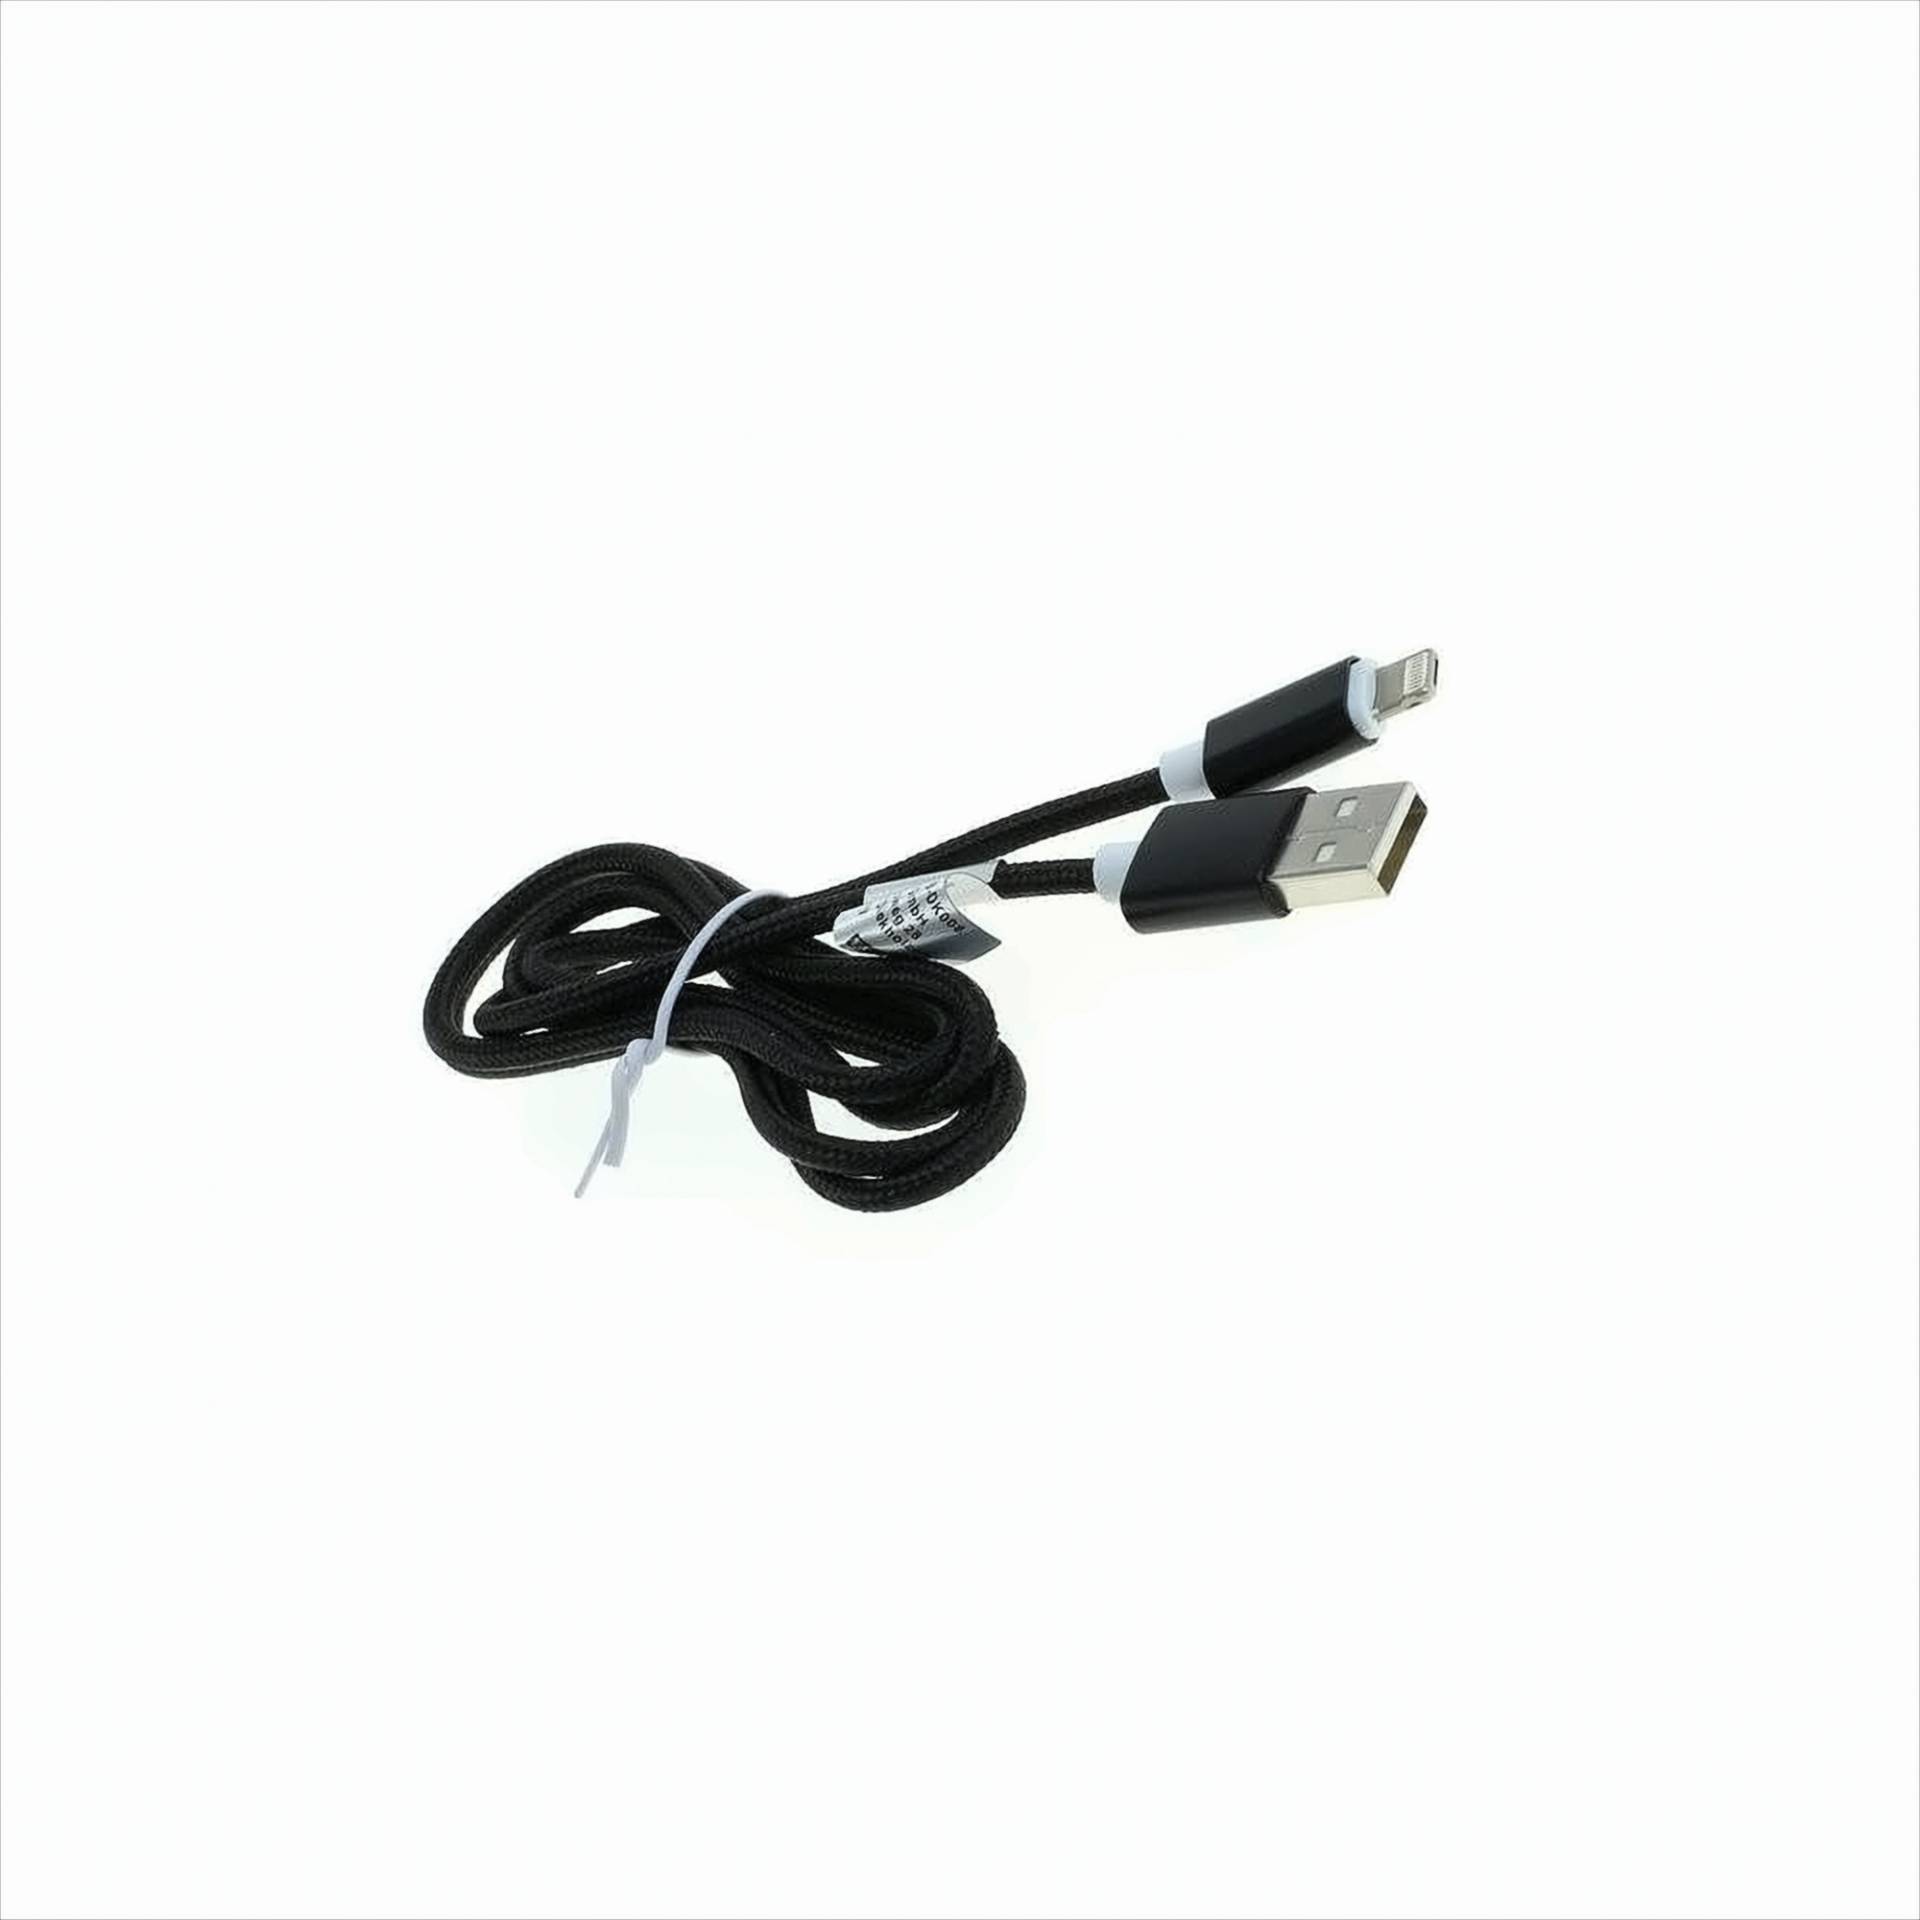 OTB Datenkabel 2in1 - kompatibel zu iPhone / Micro-USB - Nylonmantel - 1,0m - schwarz von OTB